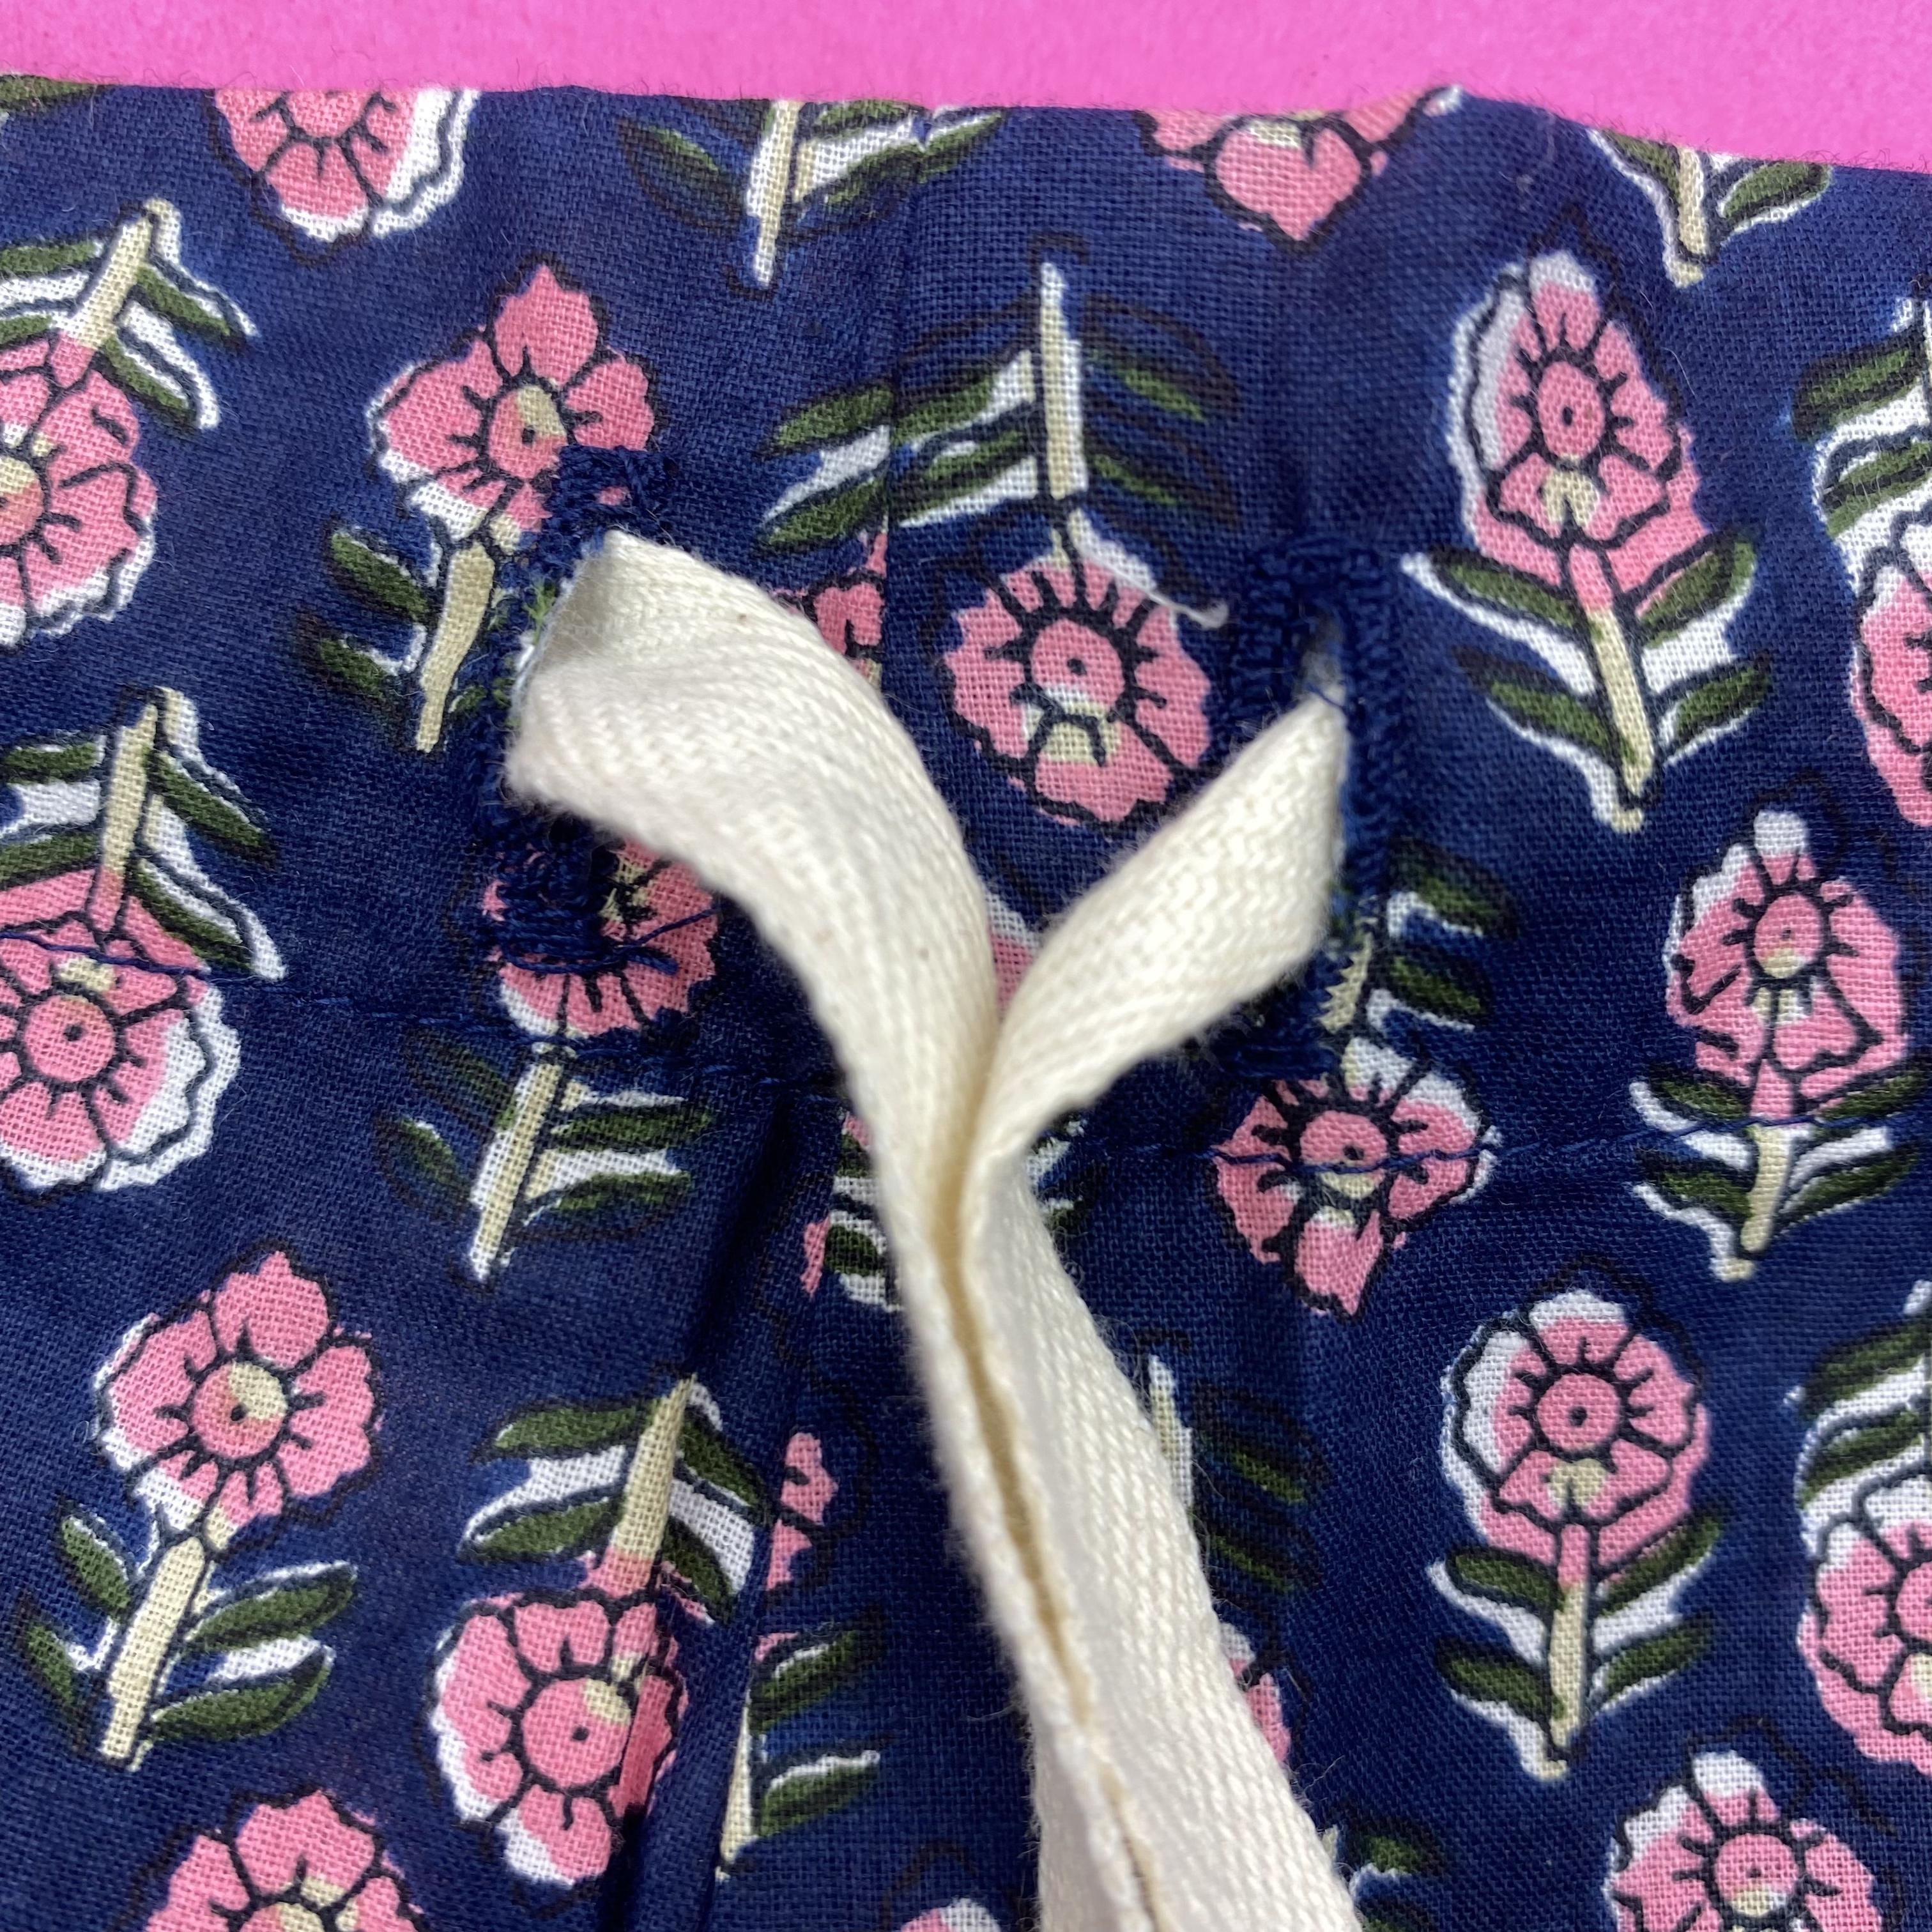 Navy cotton pj pants with tiny pink daisy motif